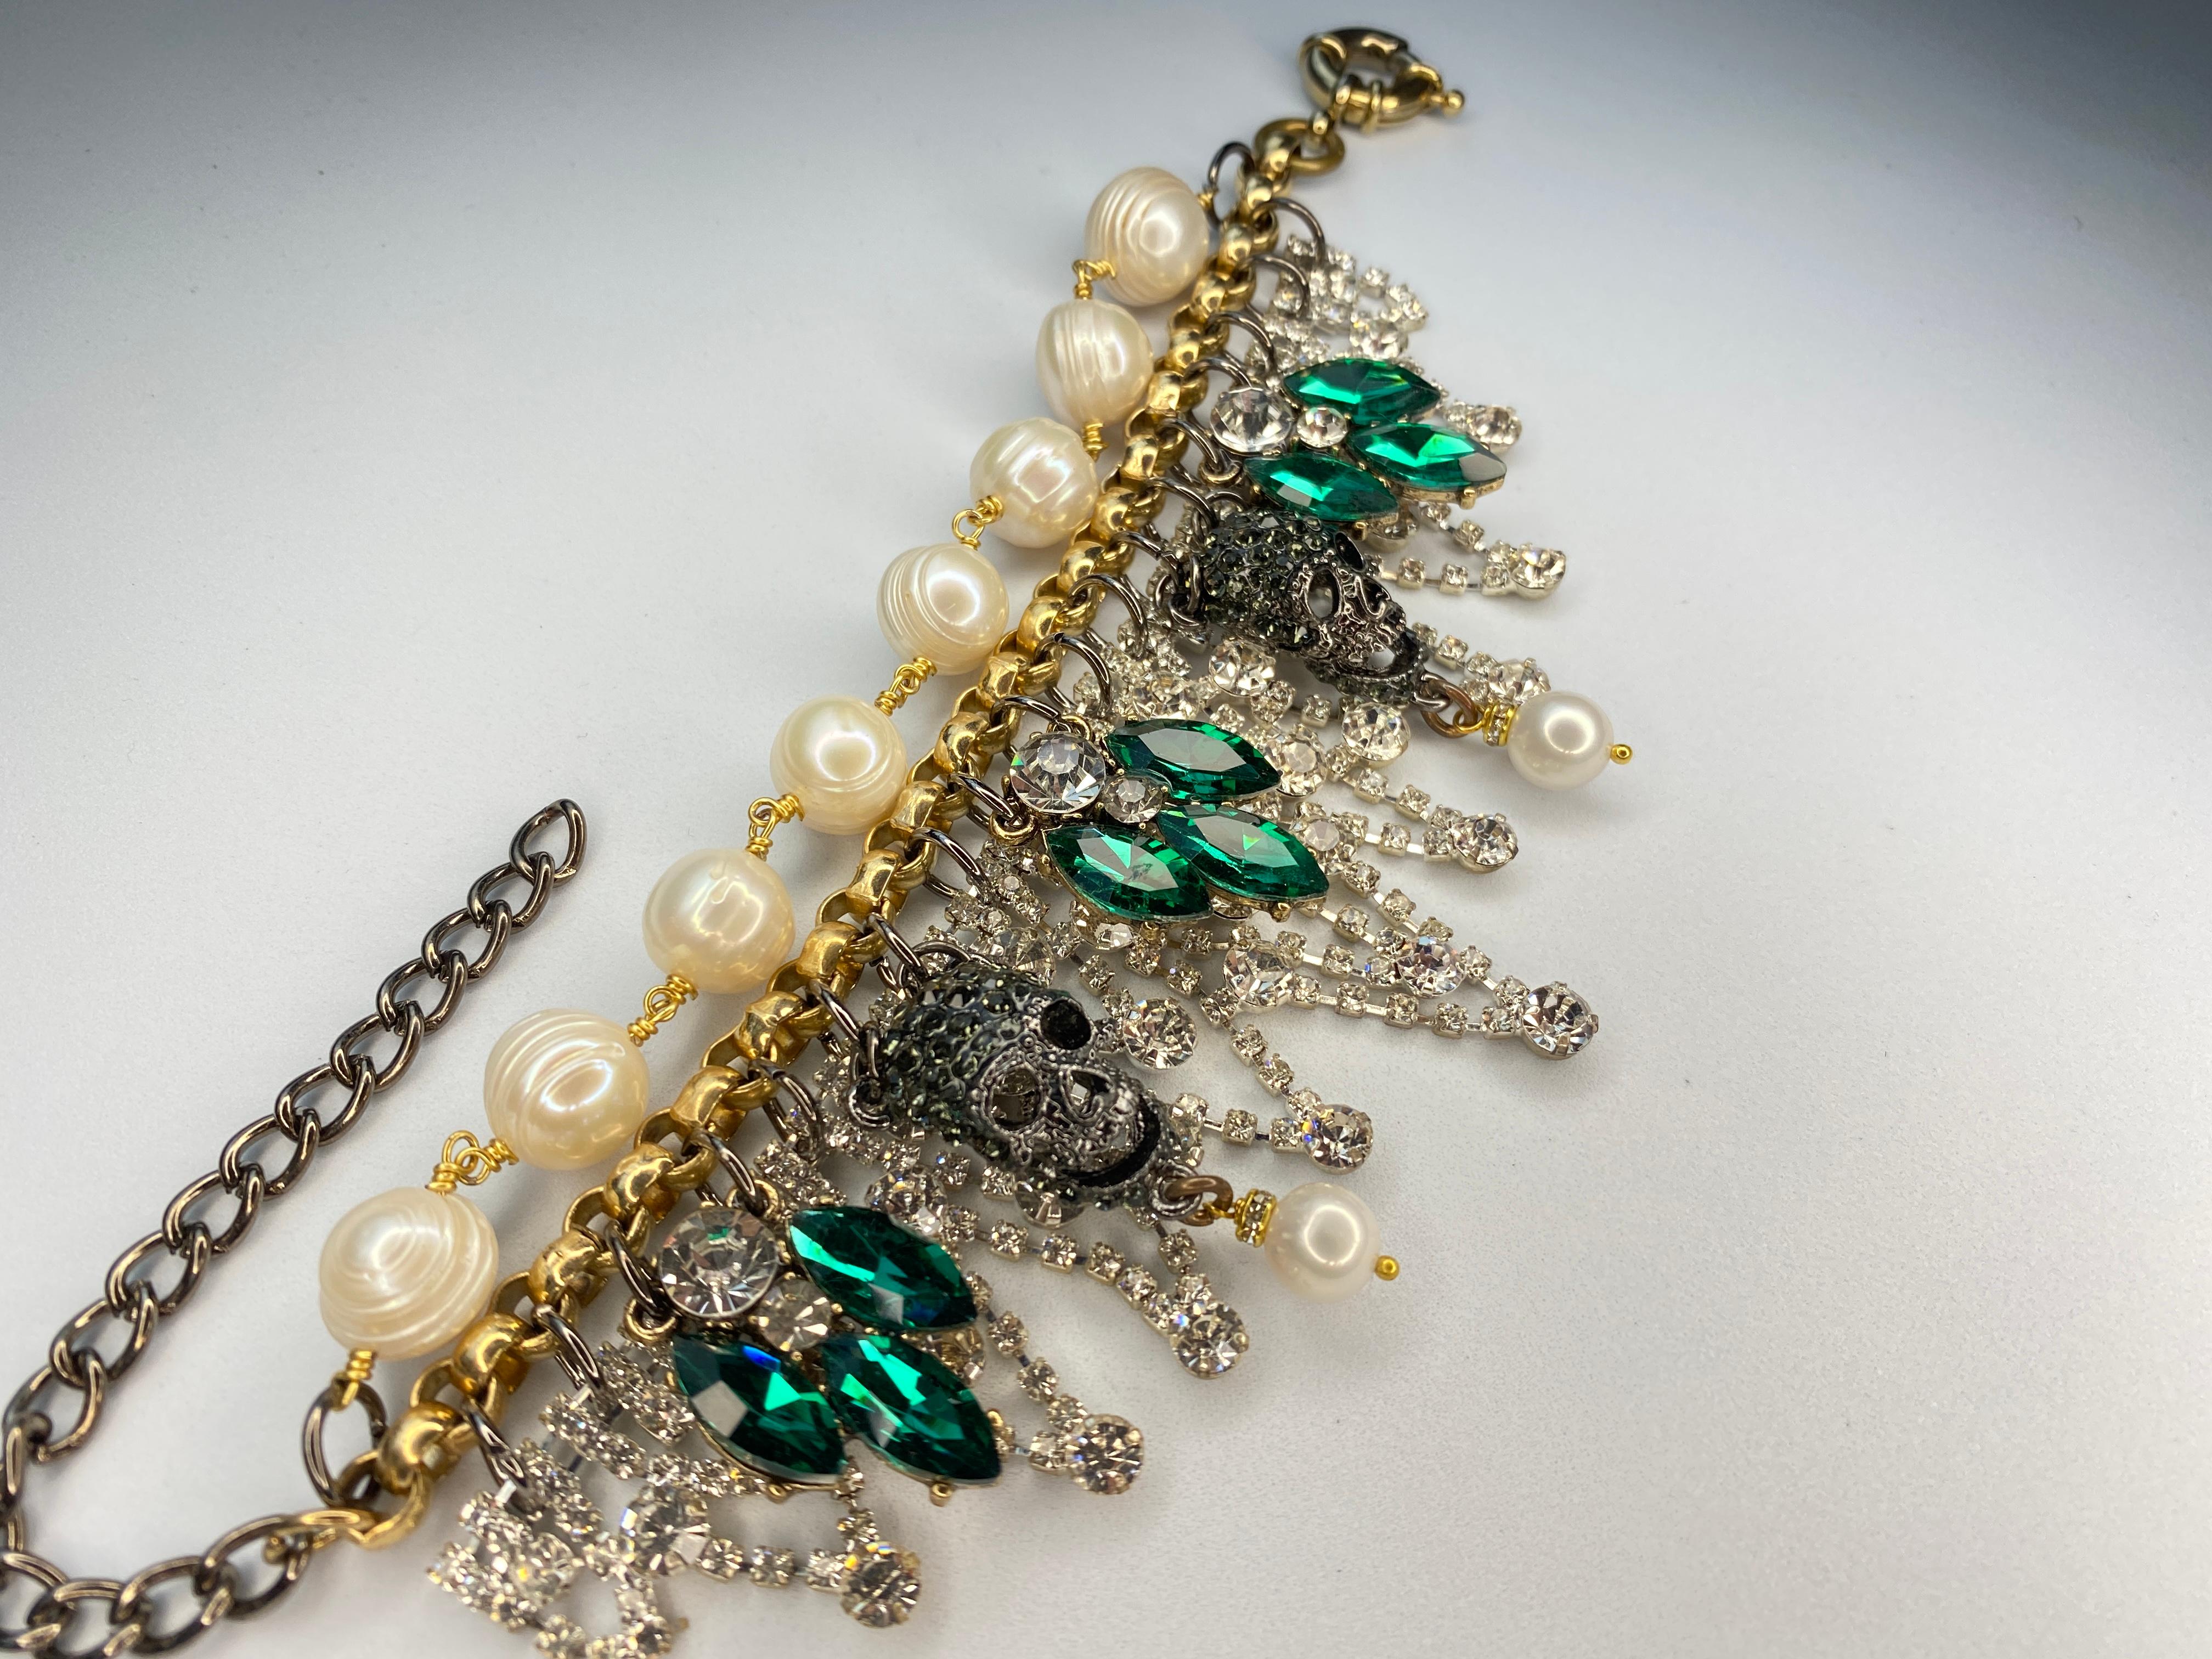 Artist Crystal skulls and freshwater pearl bracelet by Sebastian Jaramillo